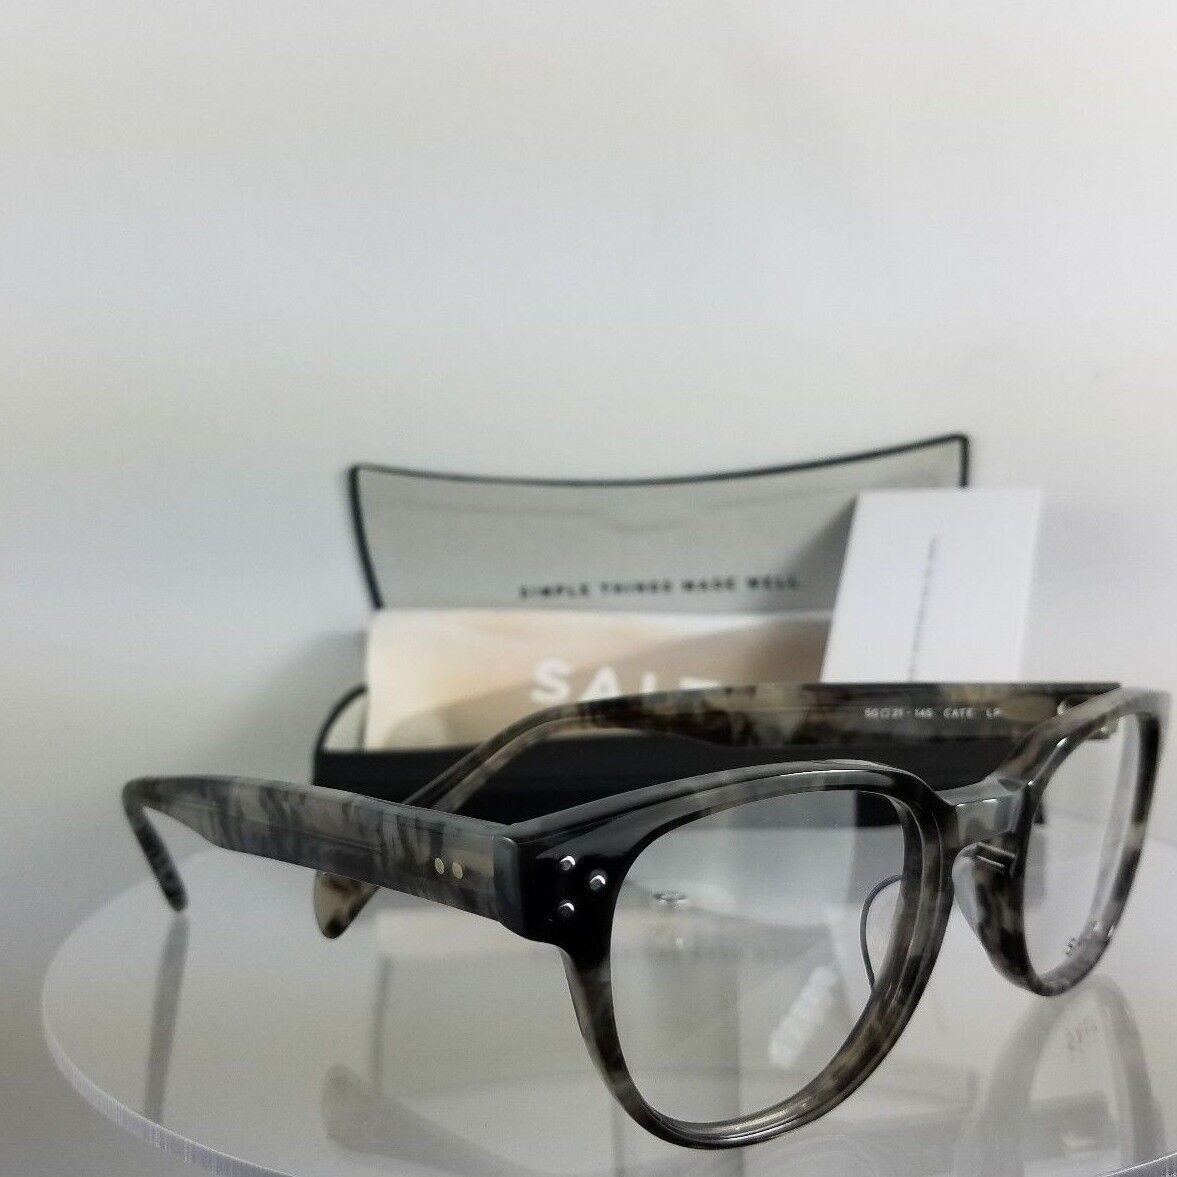 SALT CATE LP Grey Charcoal Eyeglasses